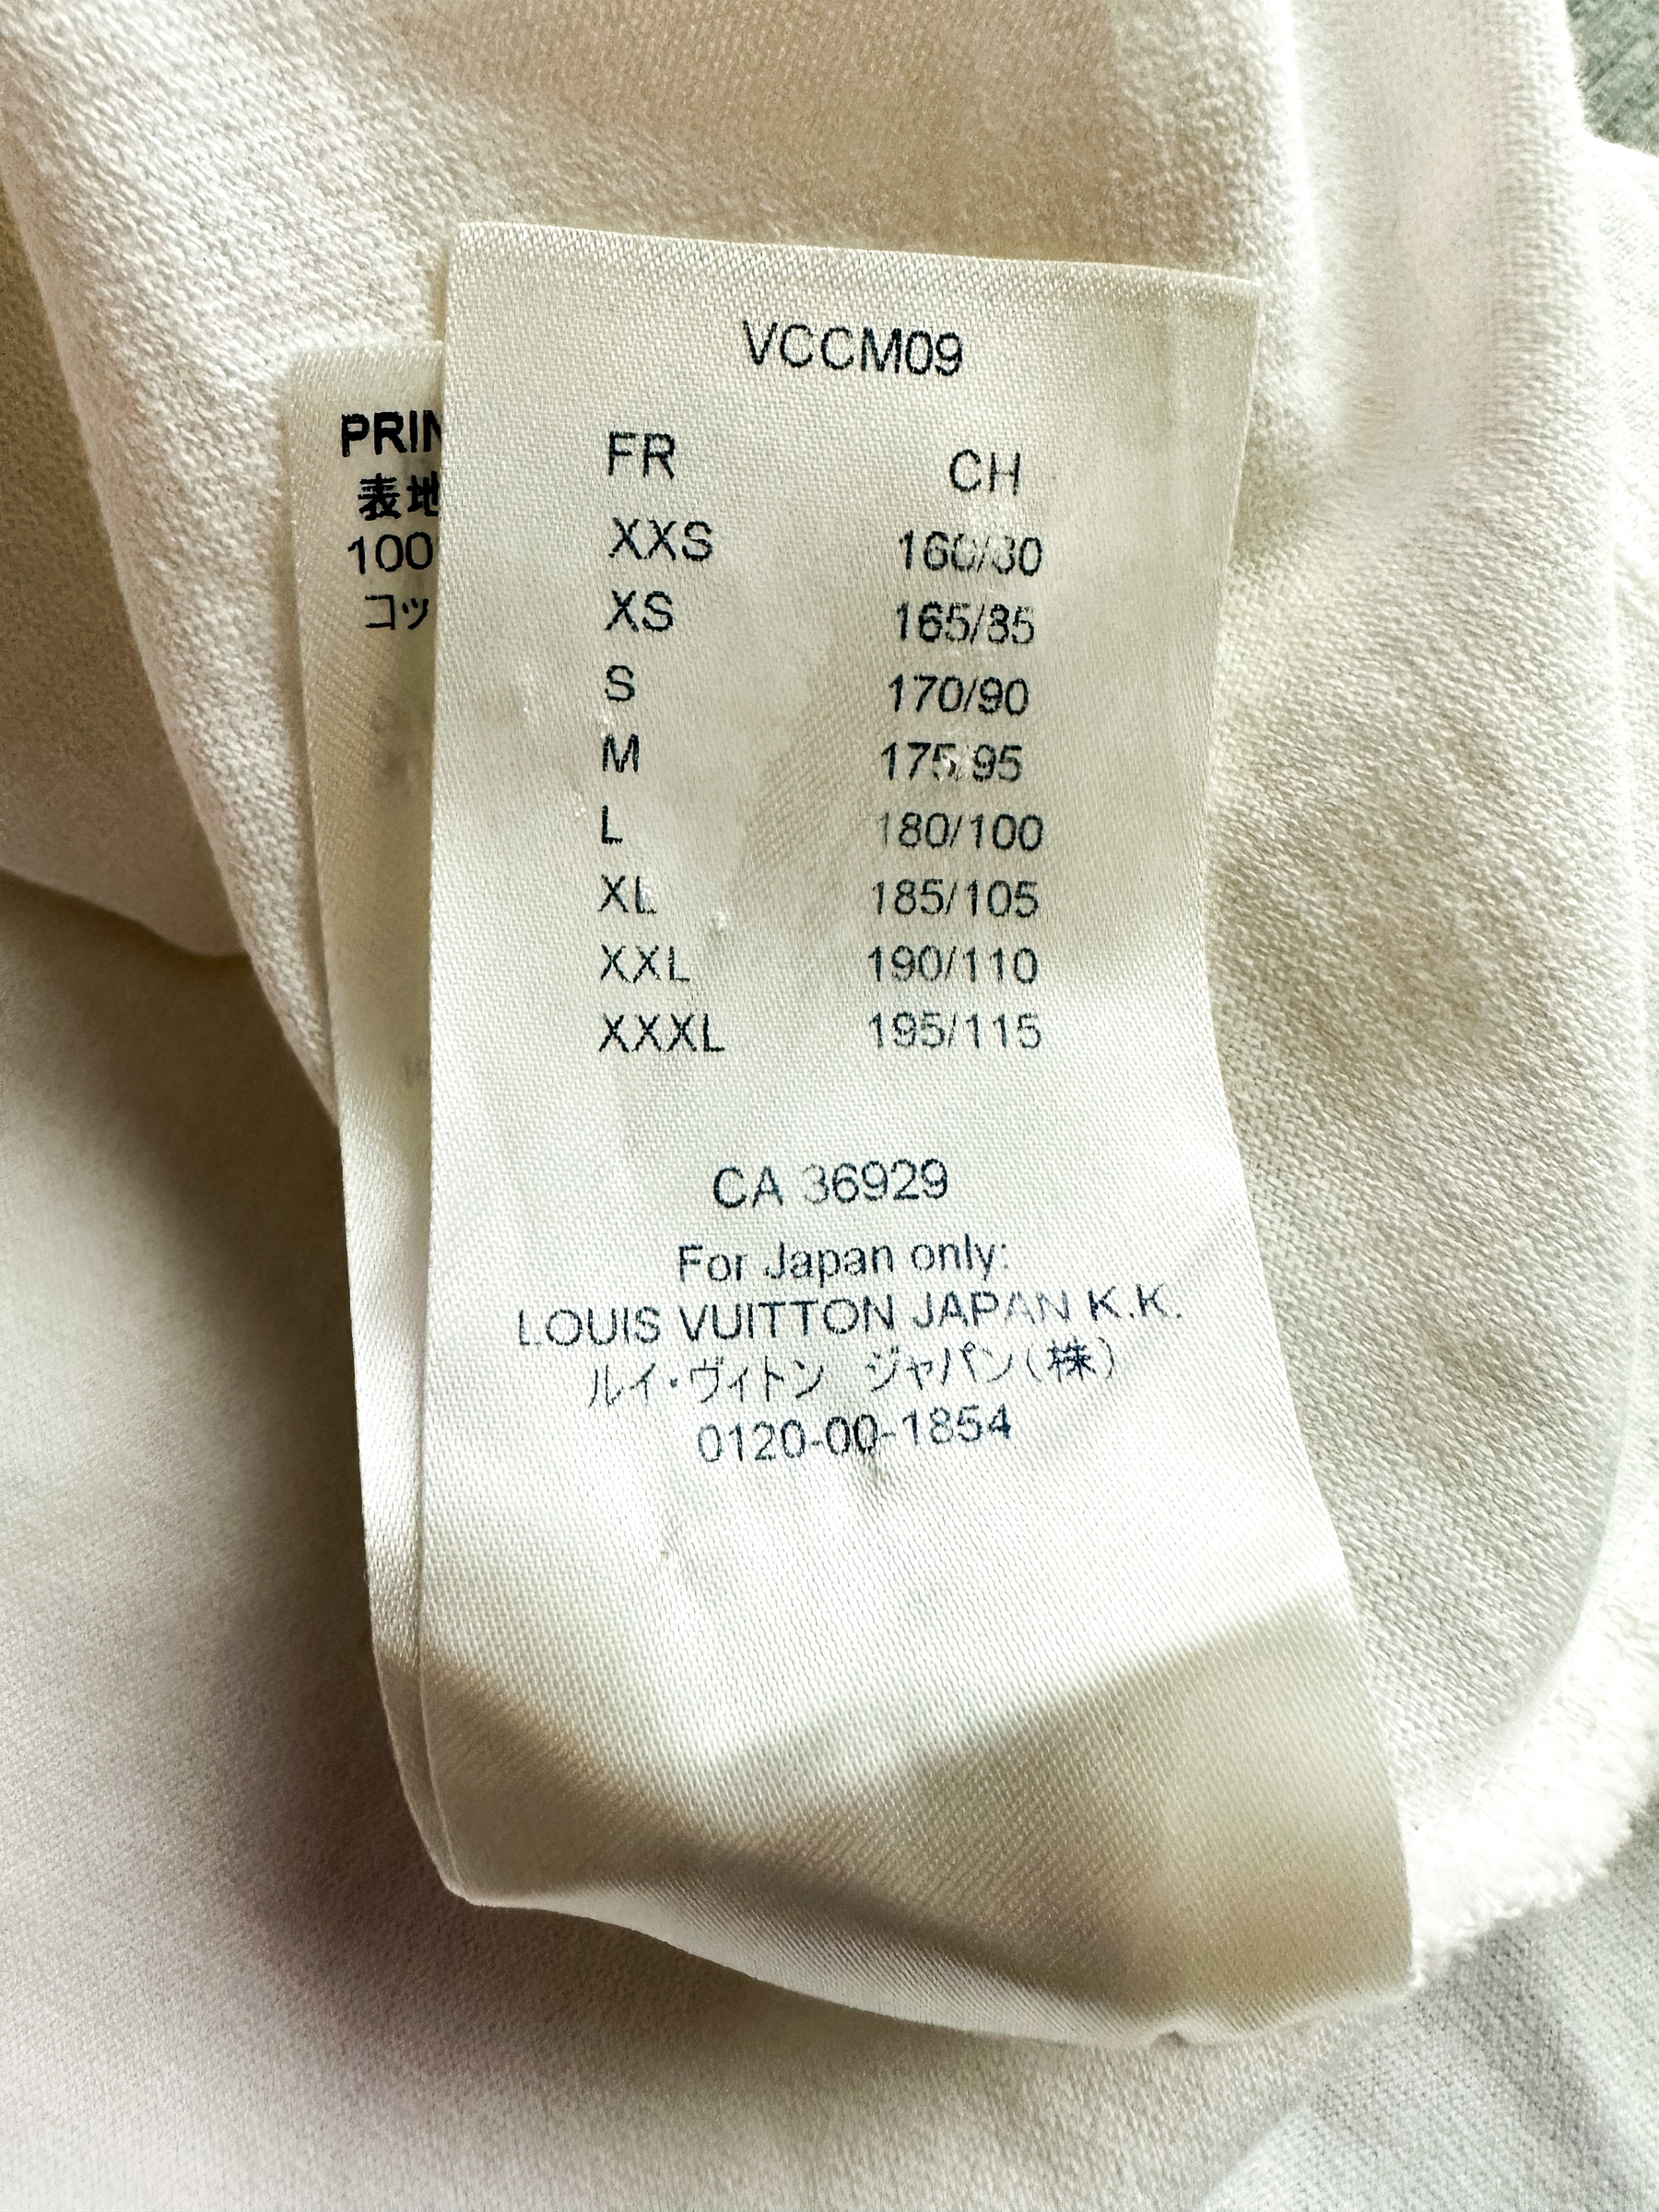 Louis Vuitton 2020 LV Stitch T-Shirt - White T-Shirts, Clothing - LOU760260